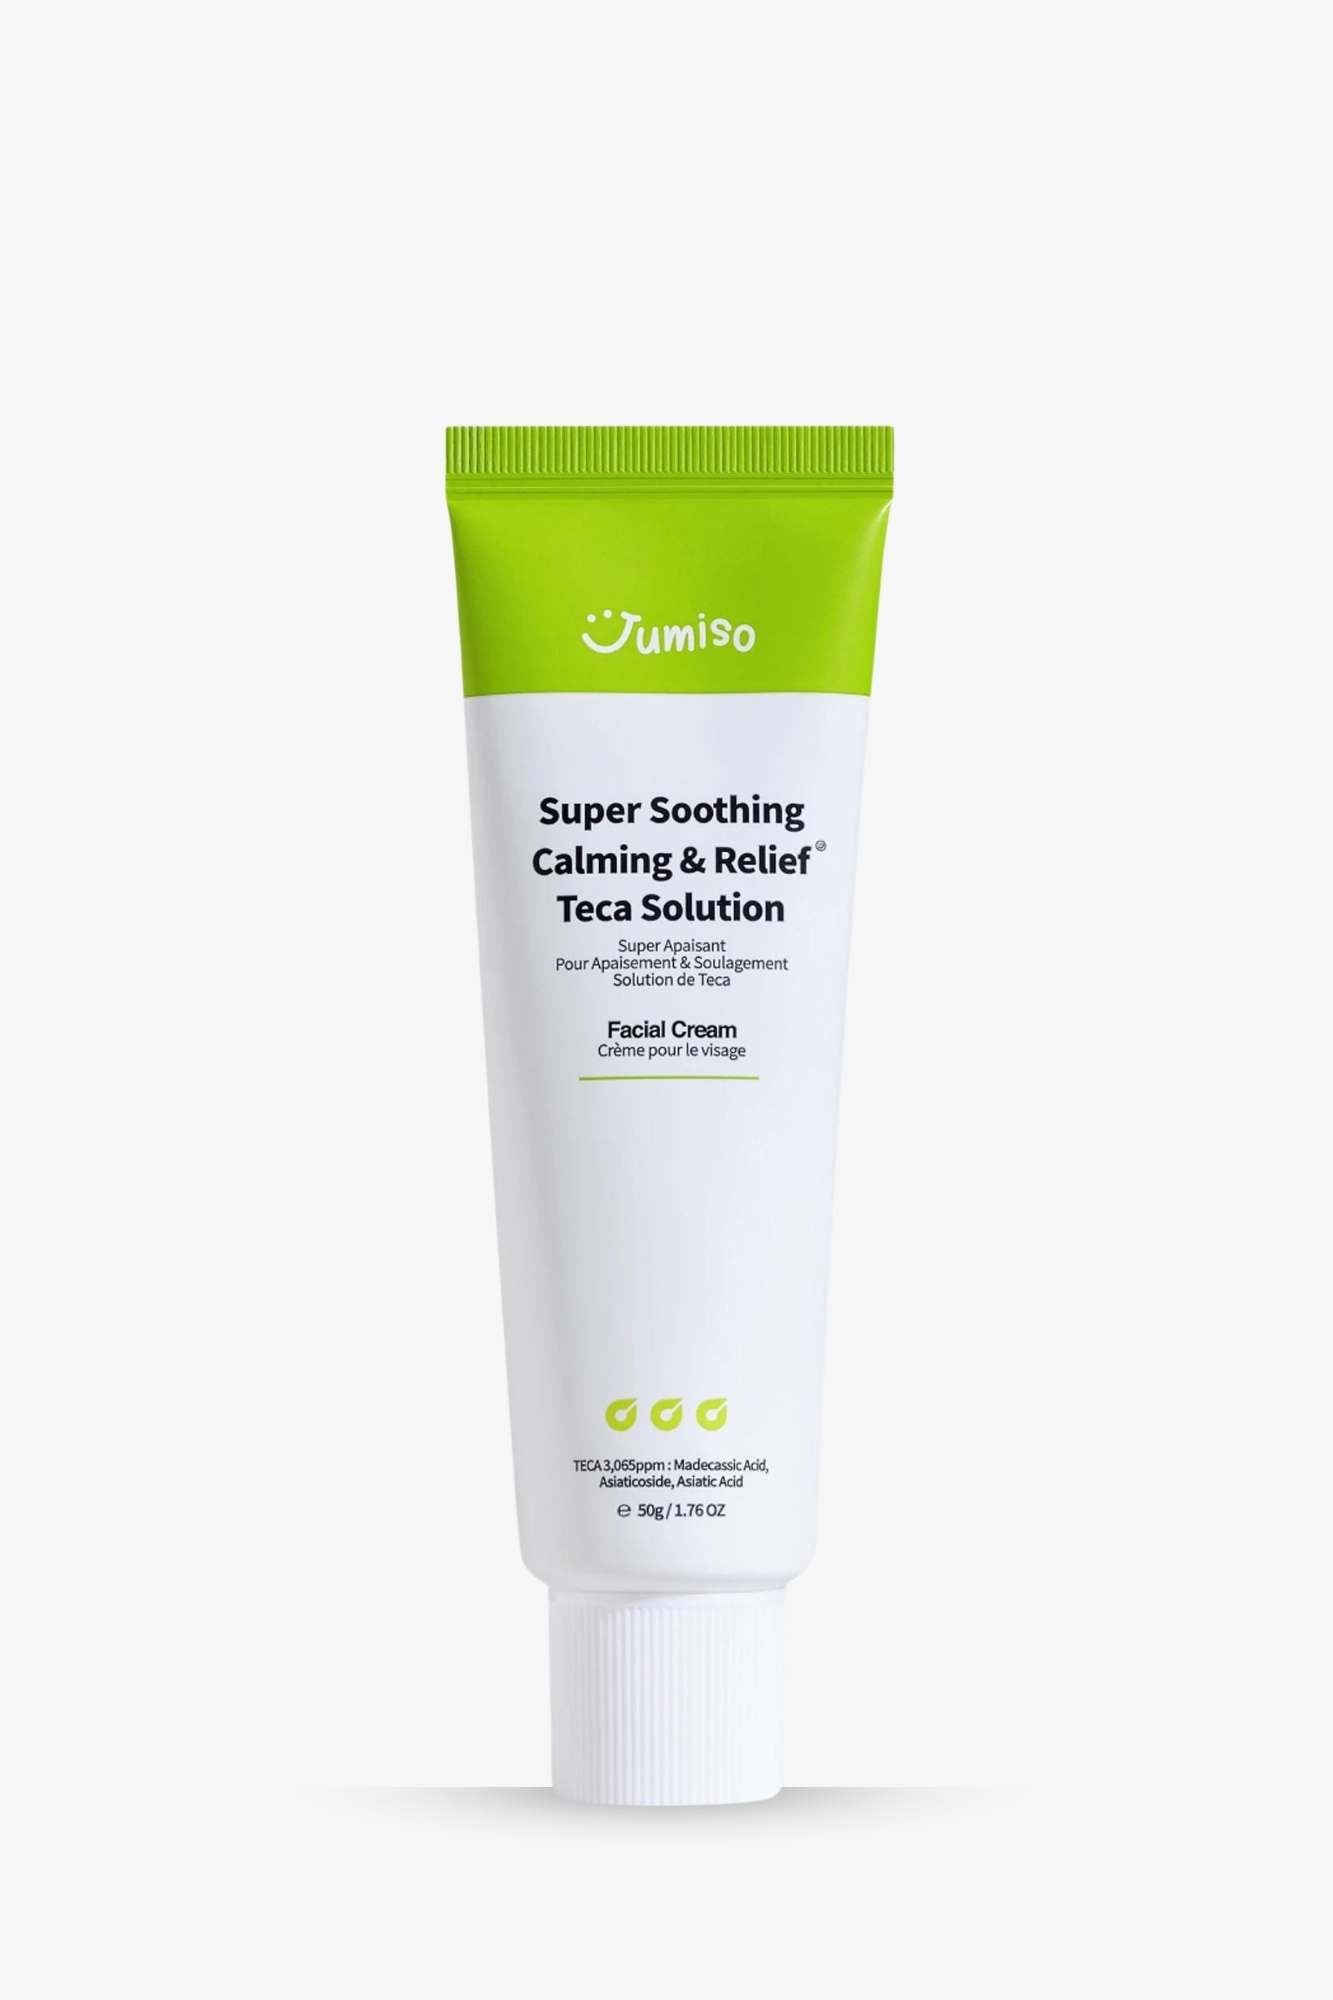 Jumiso - Super Soothing Calming & Relief Teca Solution Facial Cream - 50g